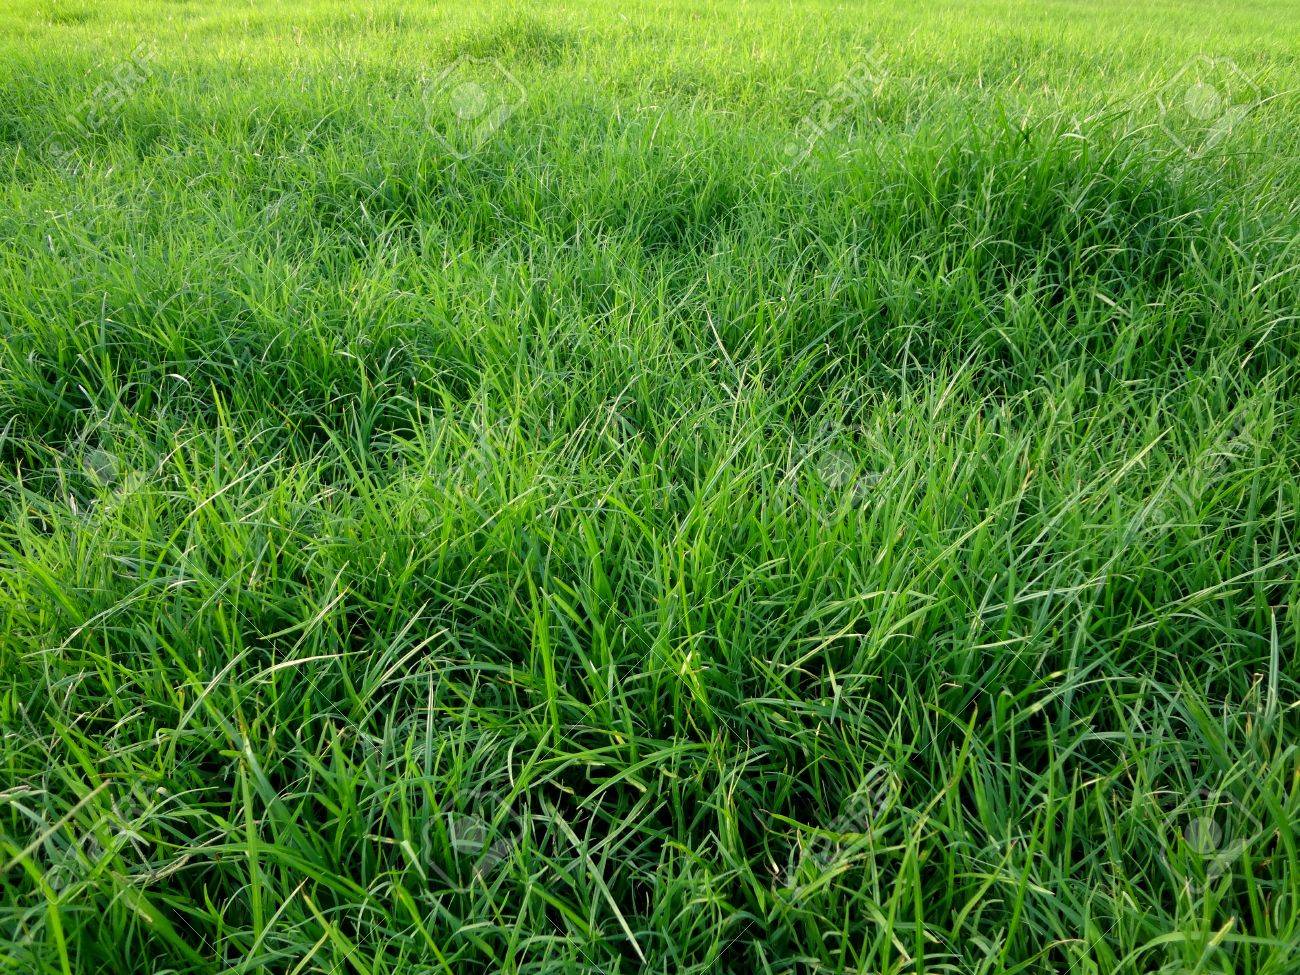 24565154-overgrown-grass-in-the-lawn-3-jpg.jpg